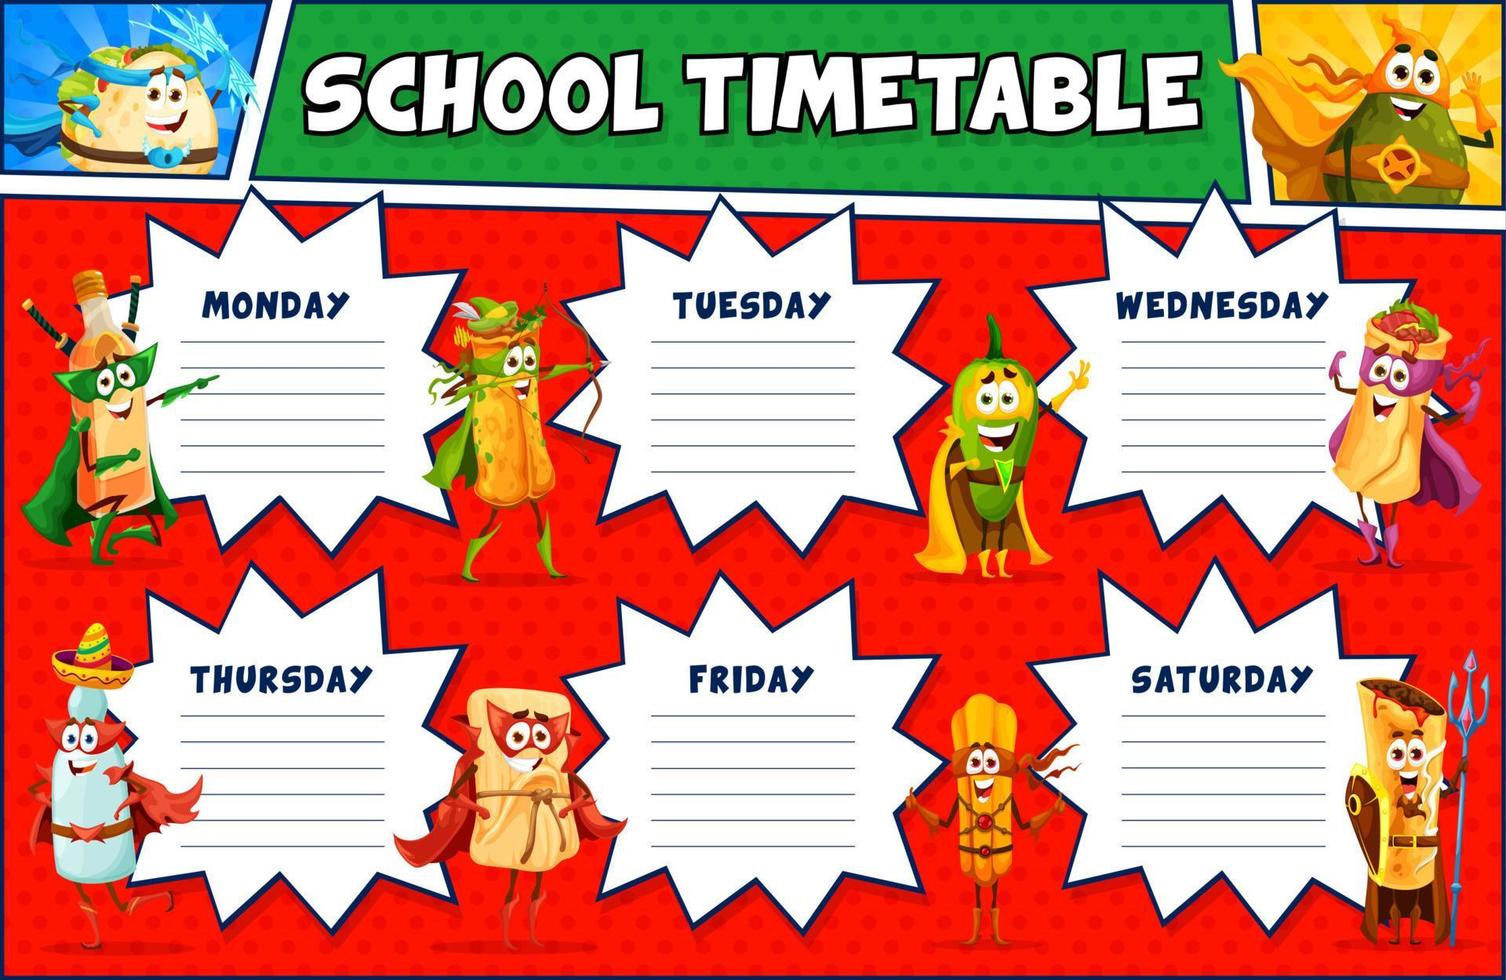 Timetable schedule superhero cartoon tex mex food vector